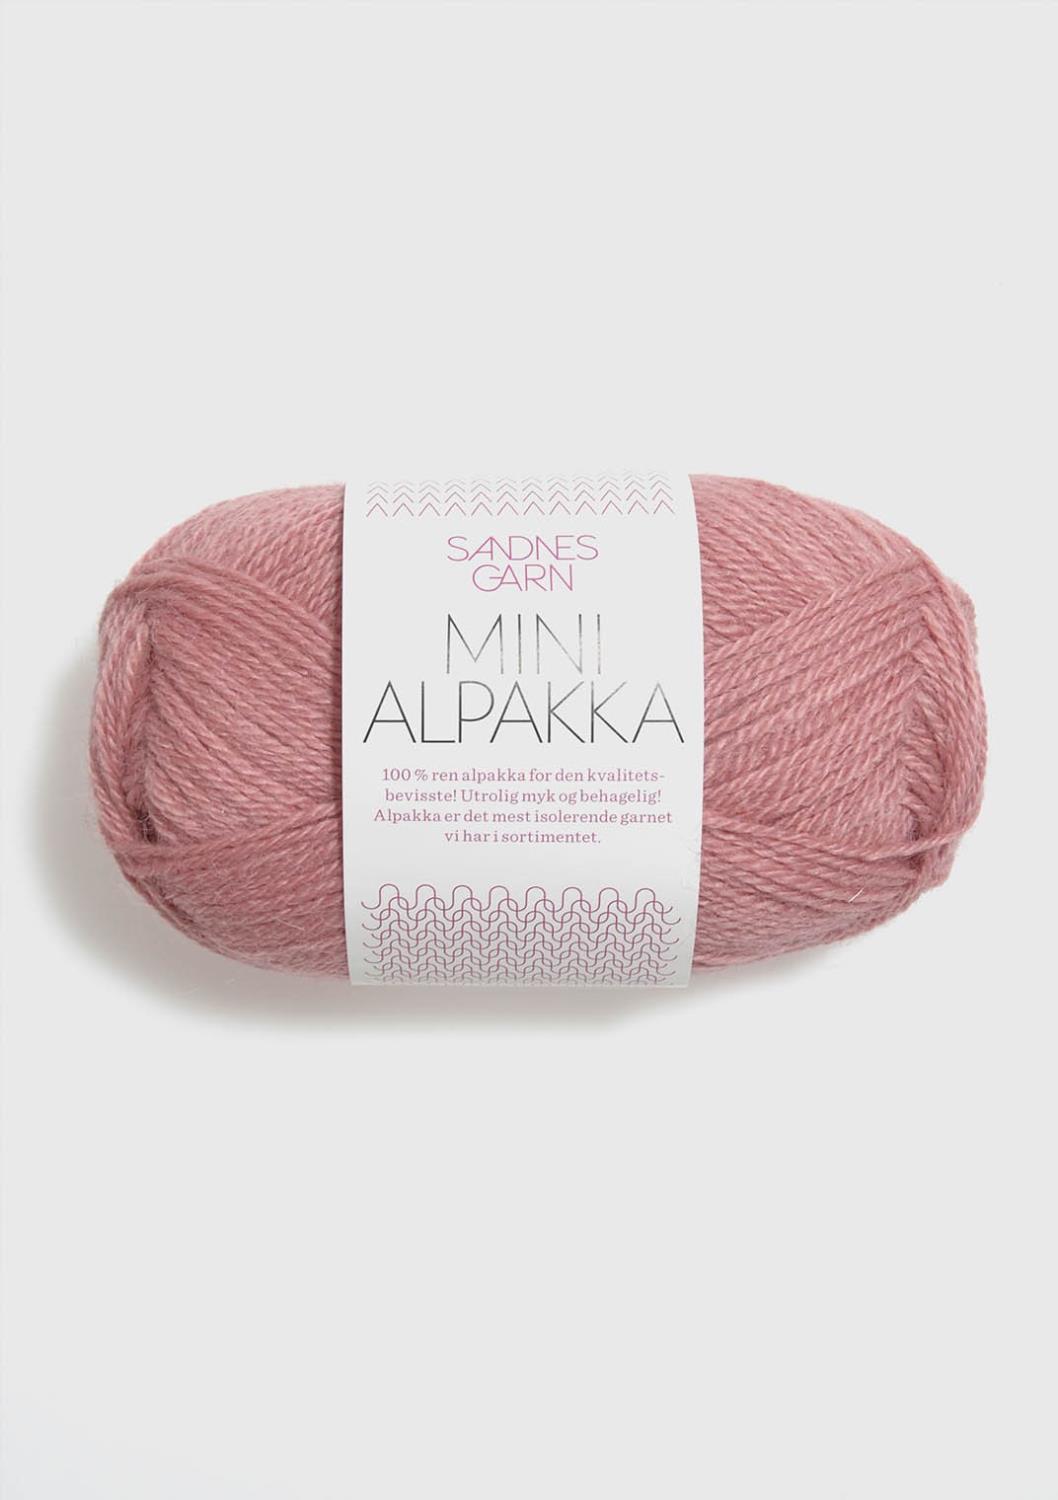 Mini Alpakka Sandnes 4023 - Støvet Gammelrosa